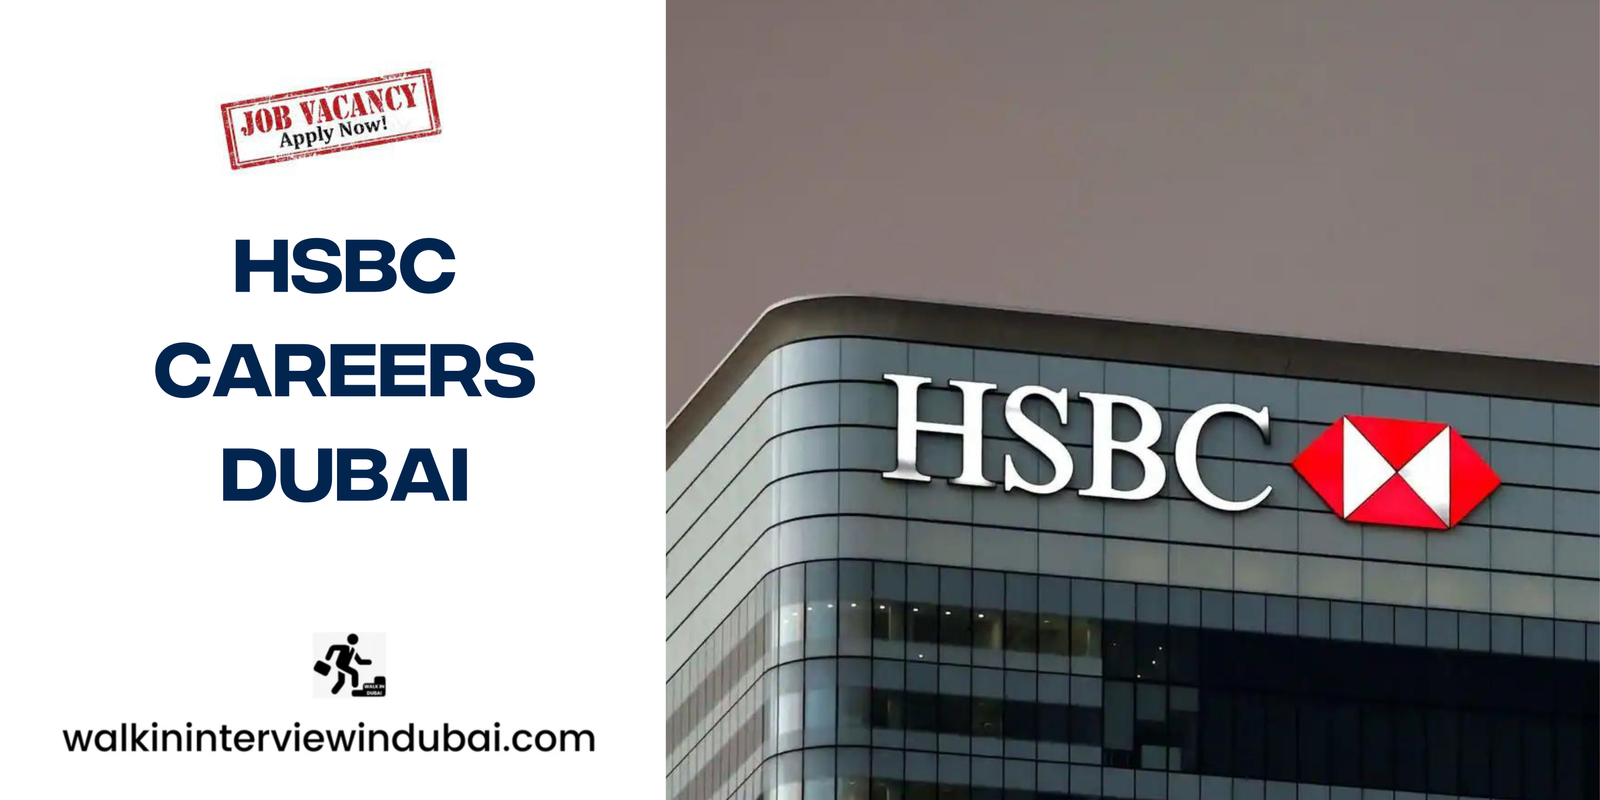 HSBC Careers in Dubai